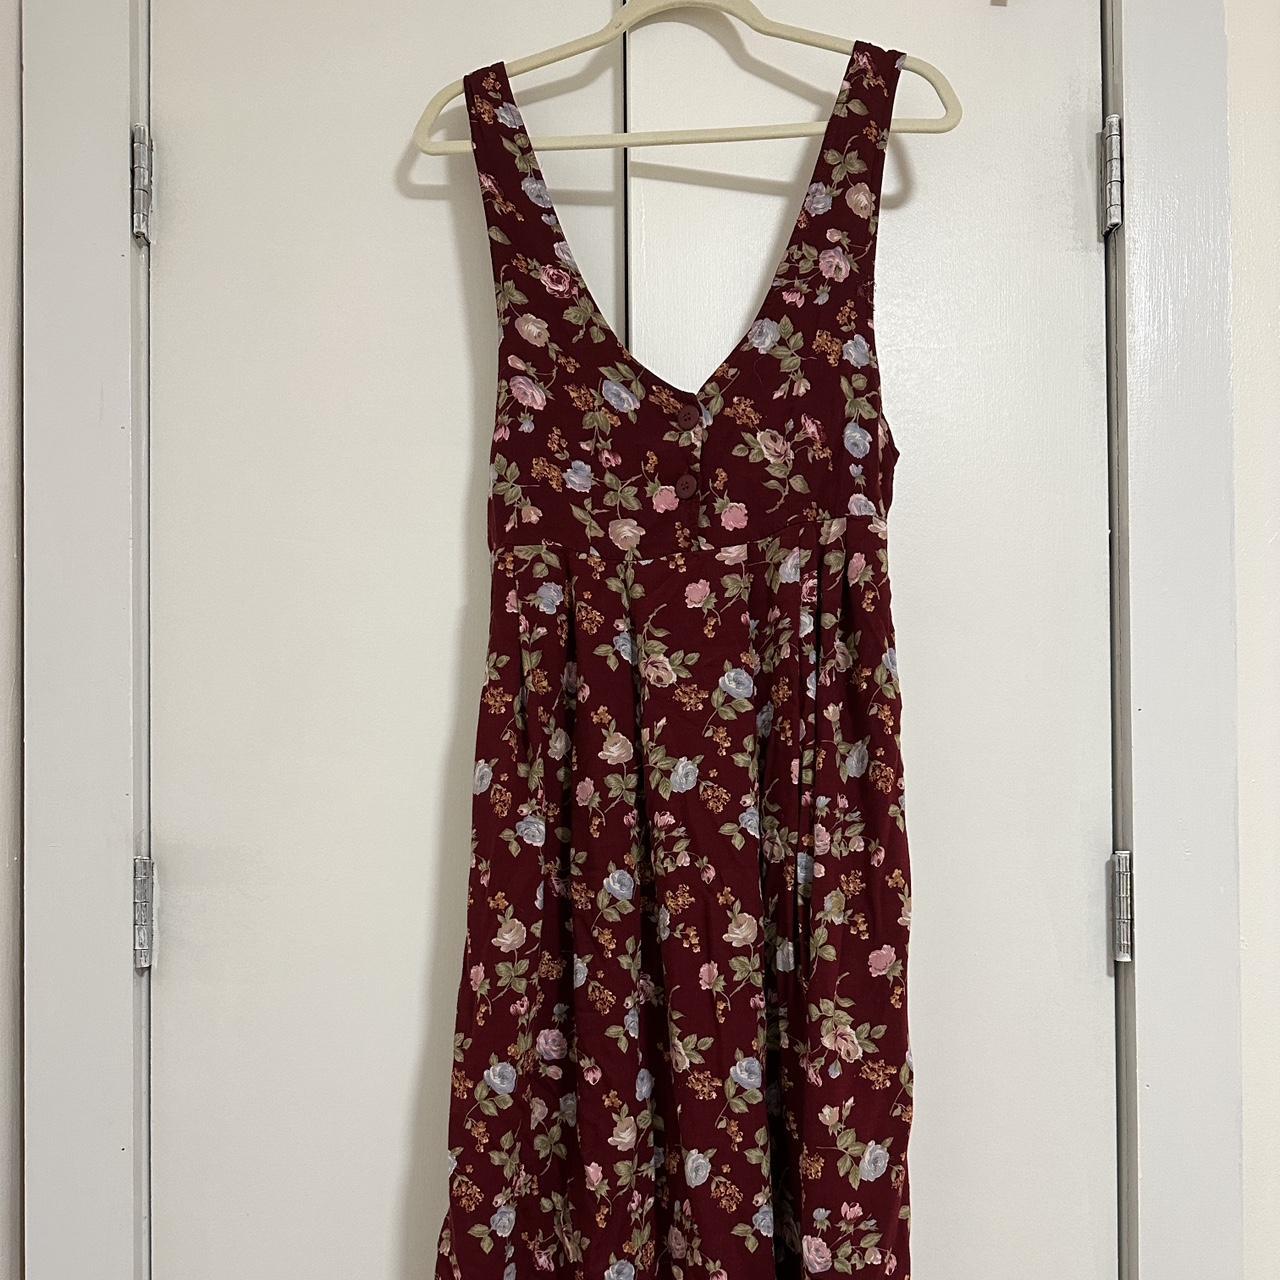 Vintage 90s floral grunge dress. Size S but has a... - Depop